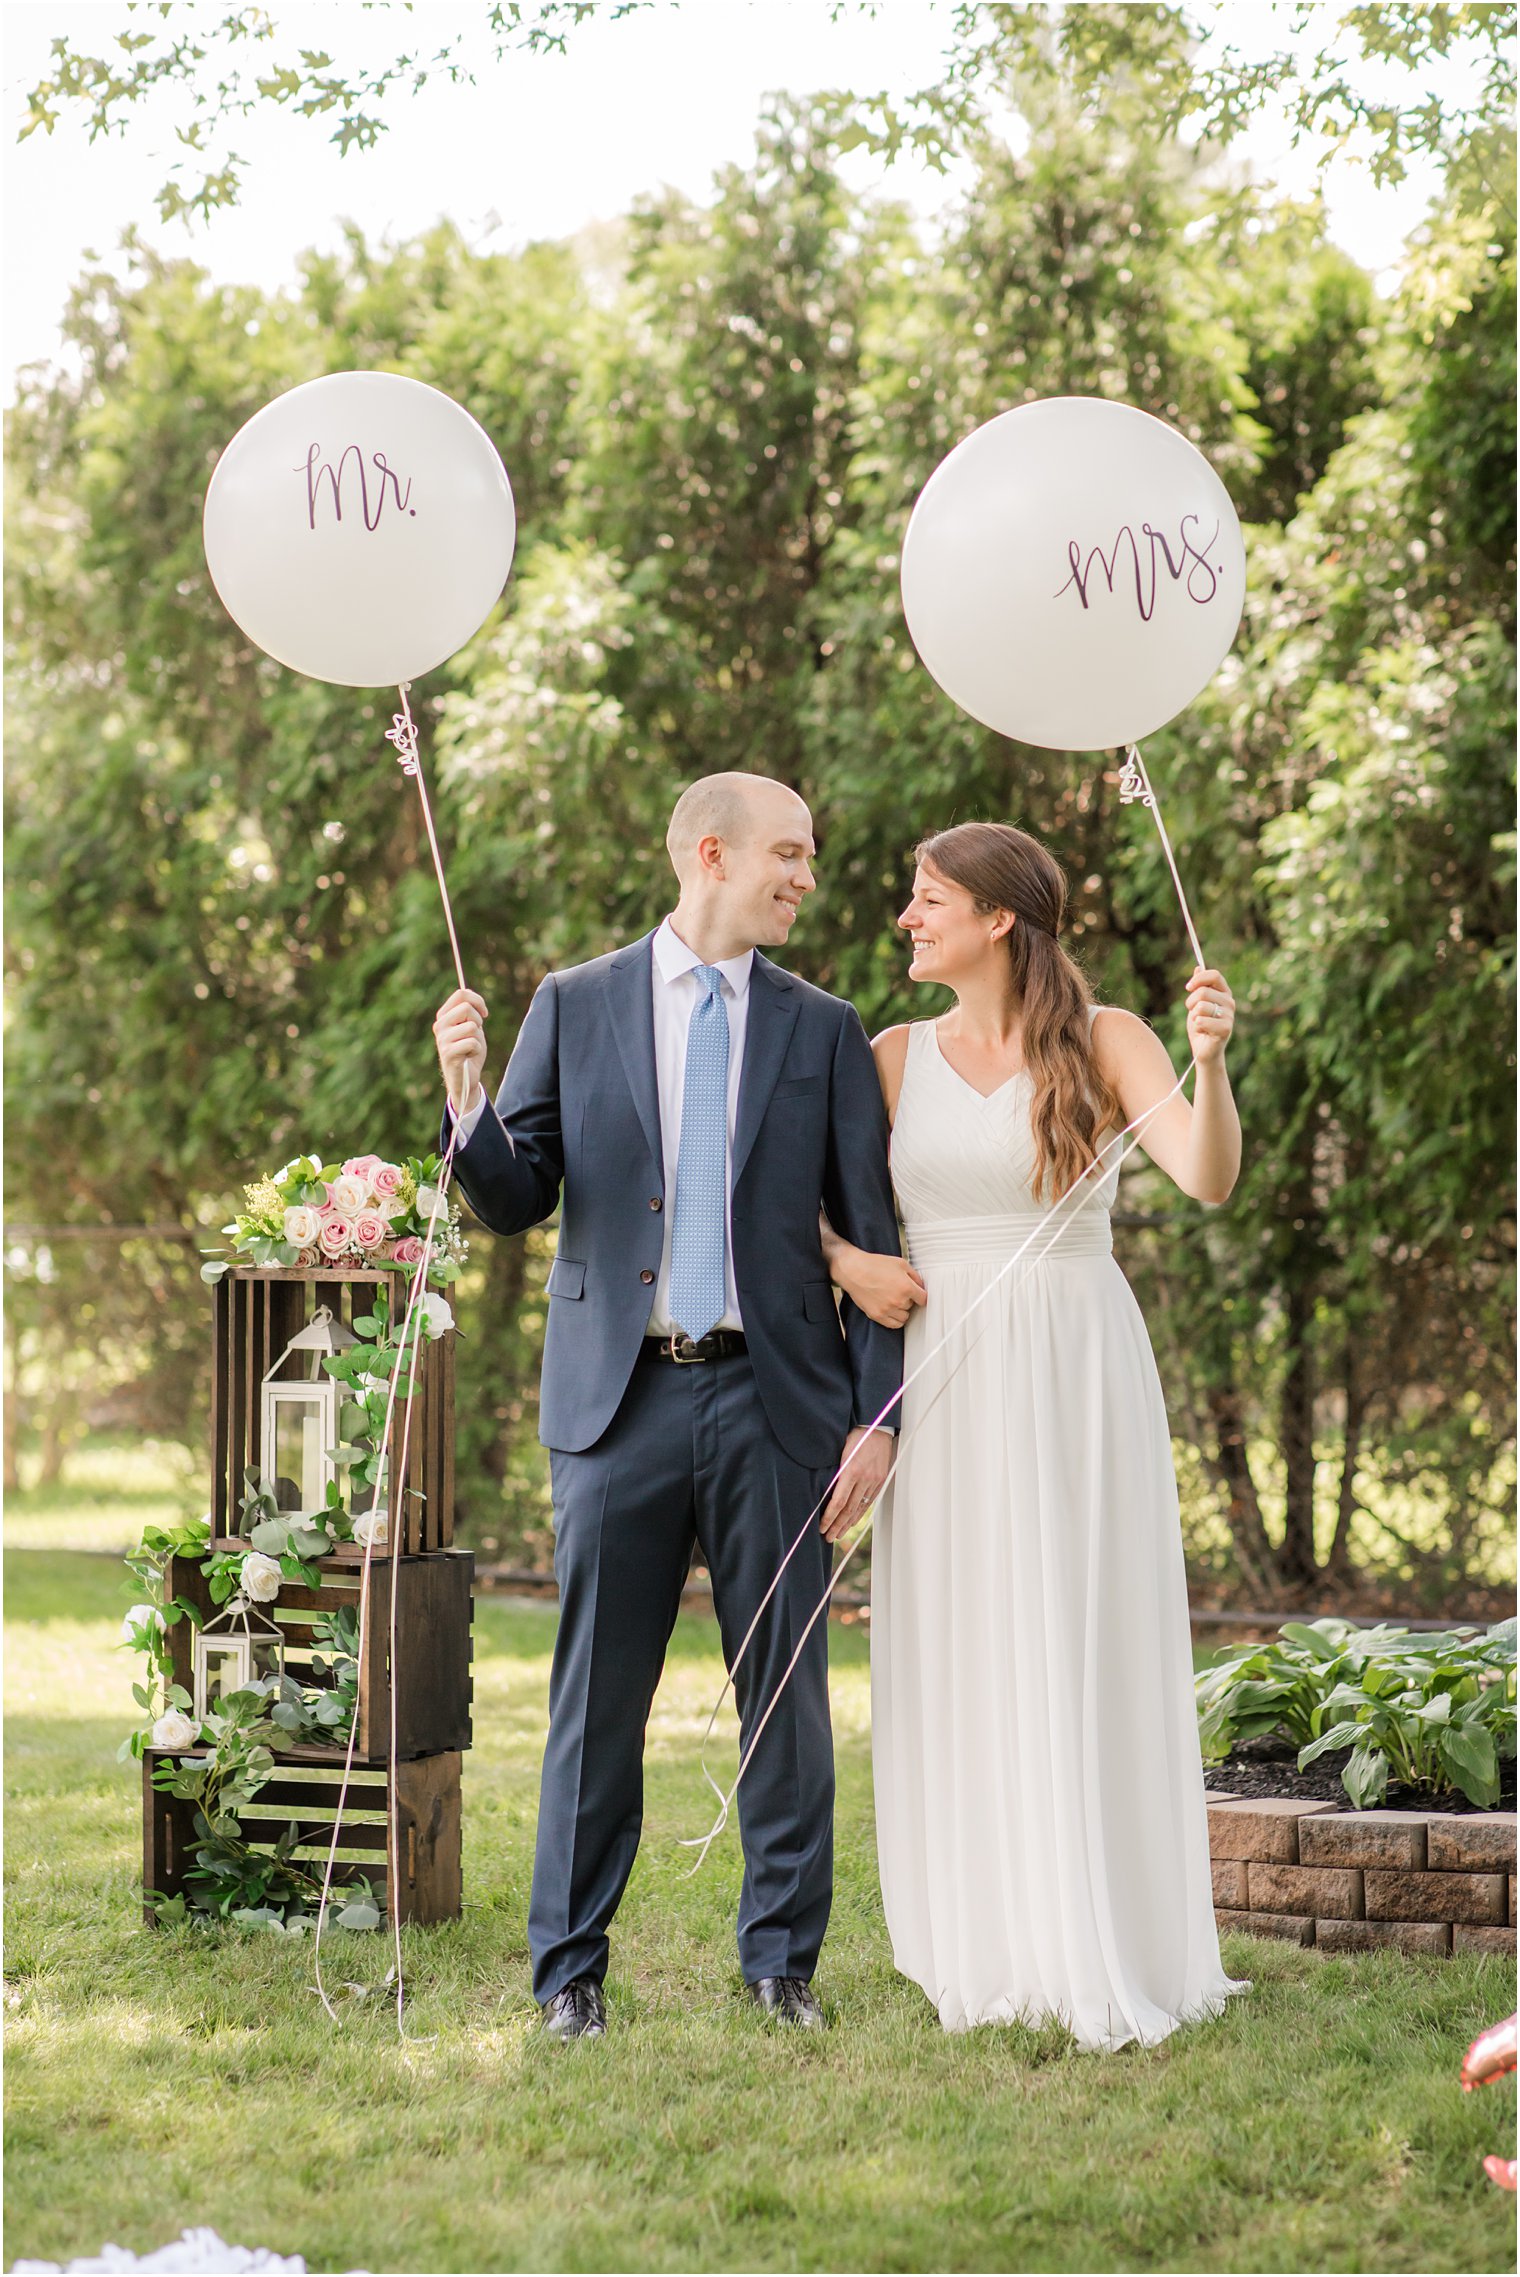 Newly married couple with balloons | NJ backyard wedding by Idalia Photography